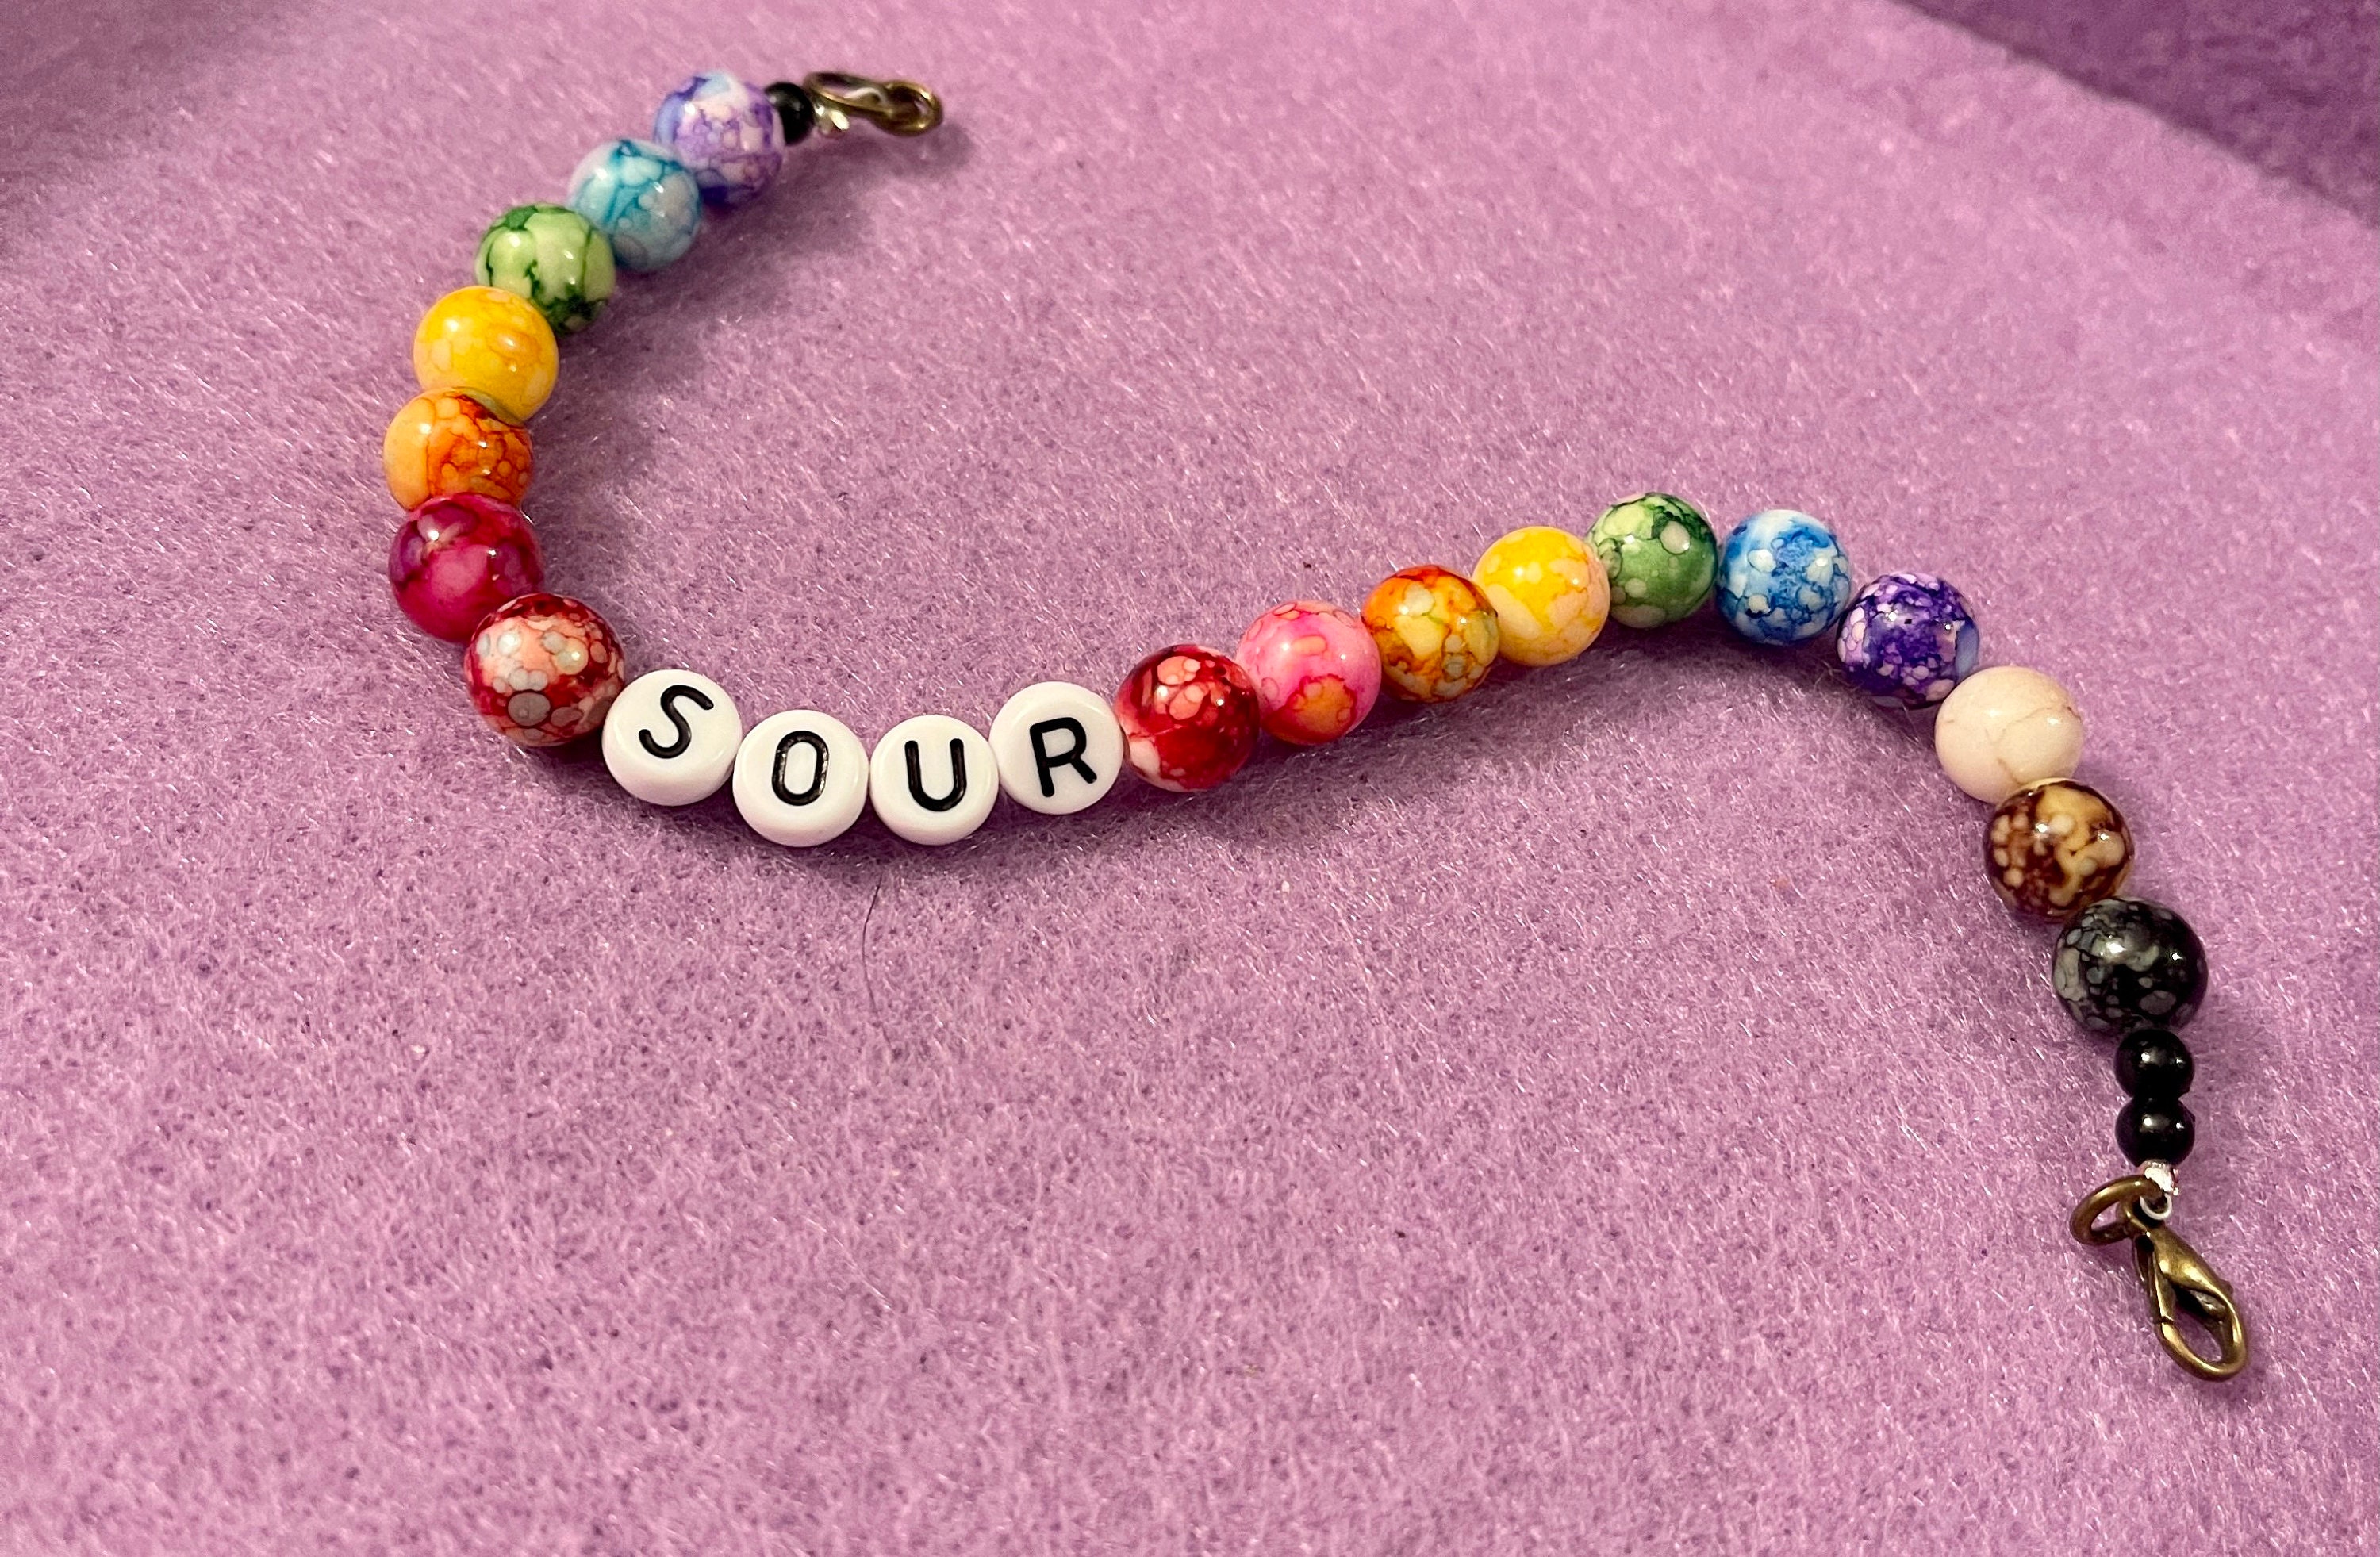 SOUR Olivia Rodrigo rainbow bracelet FREE SHIPPING | Etsy